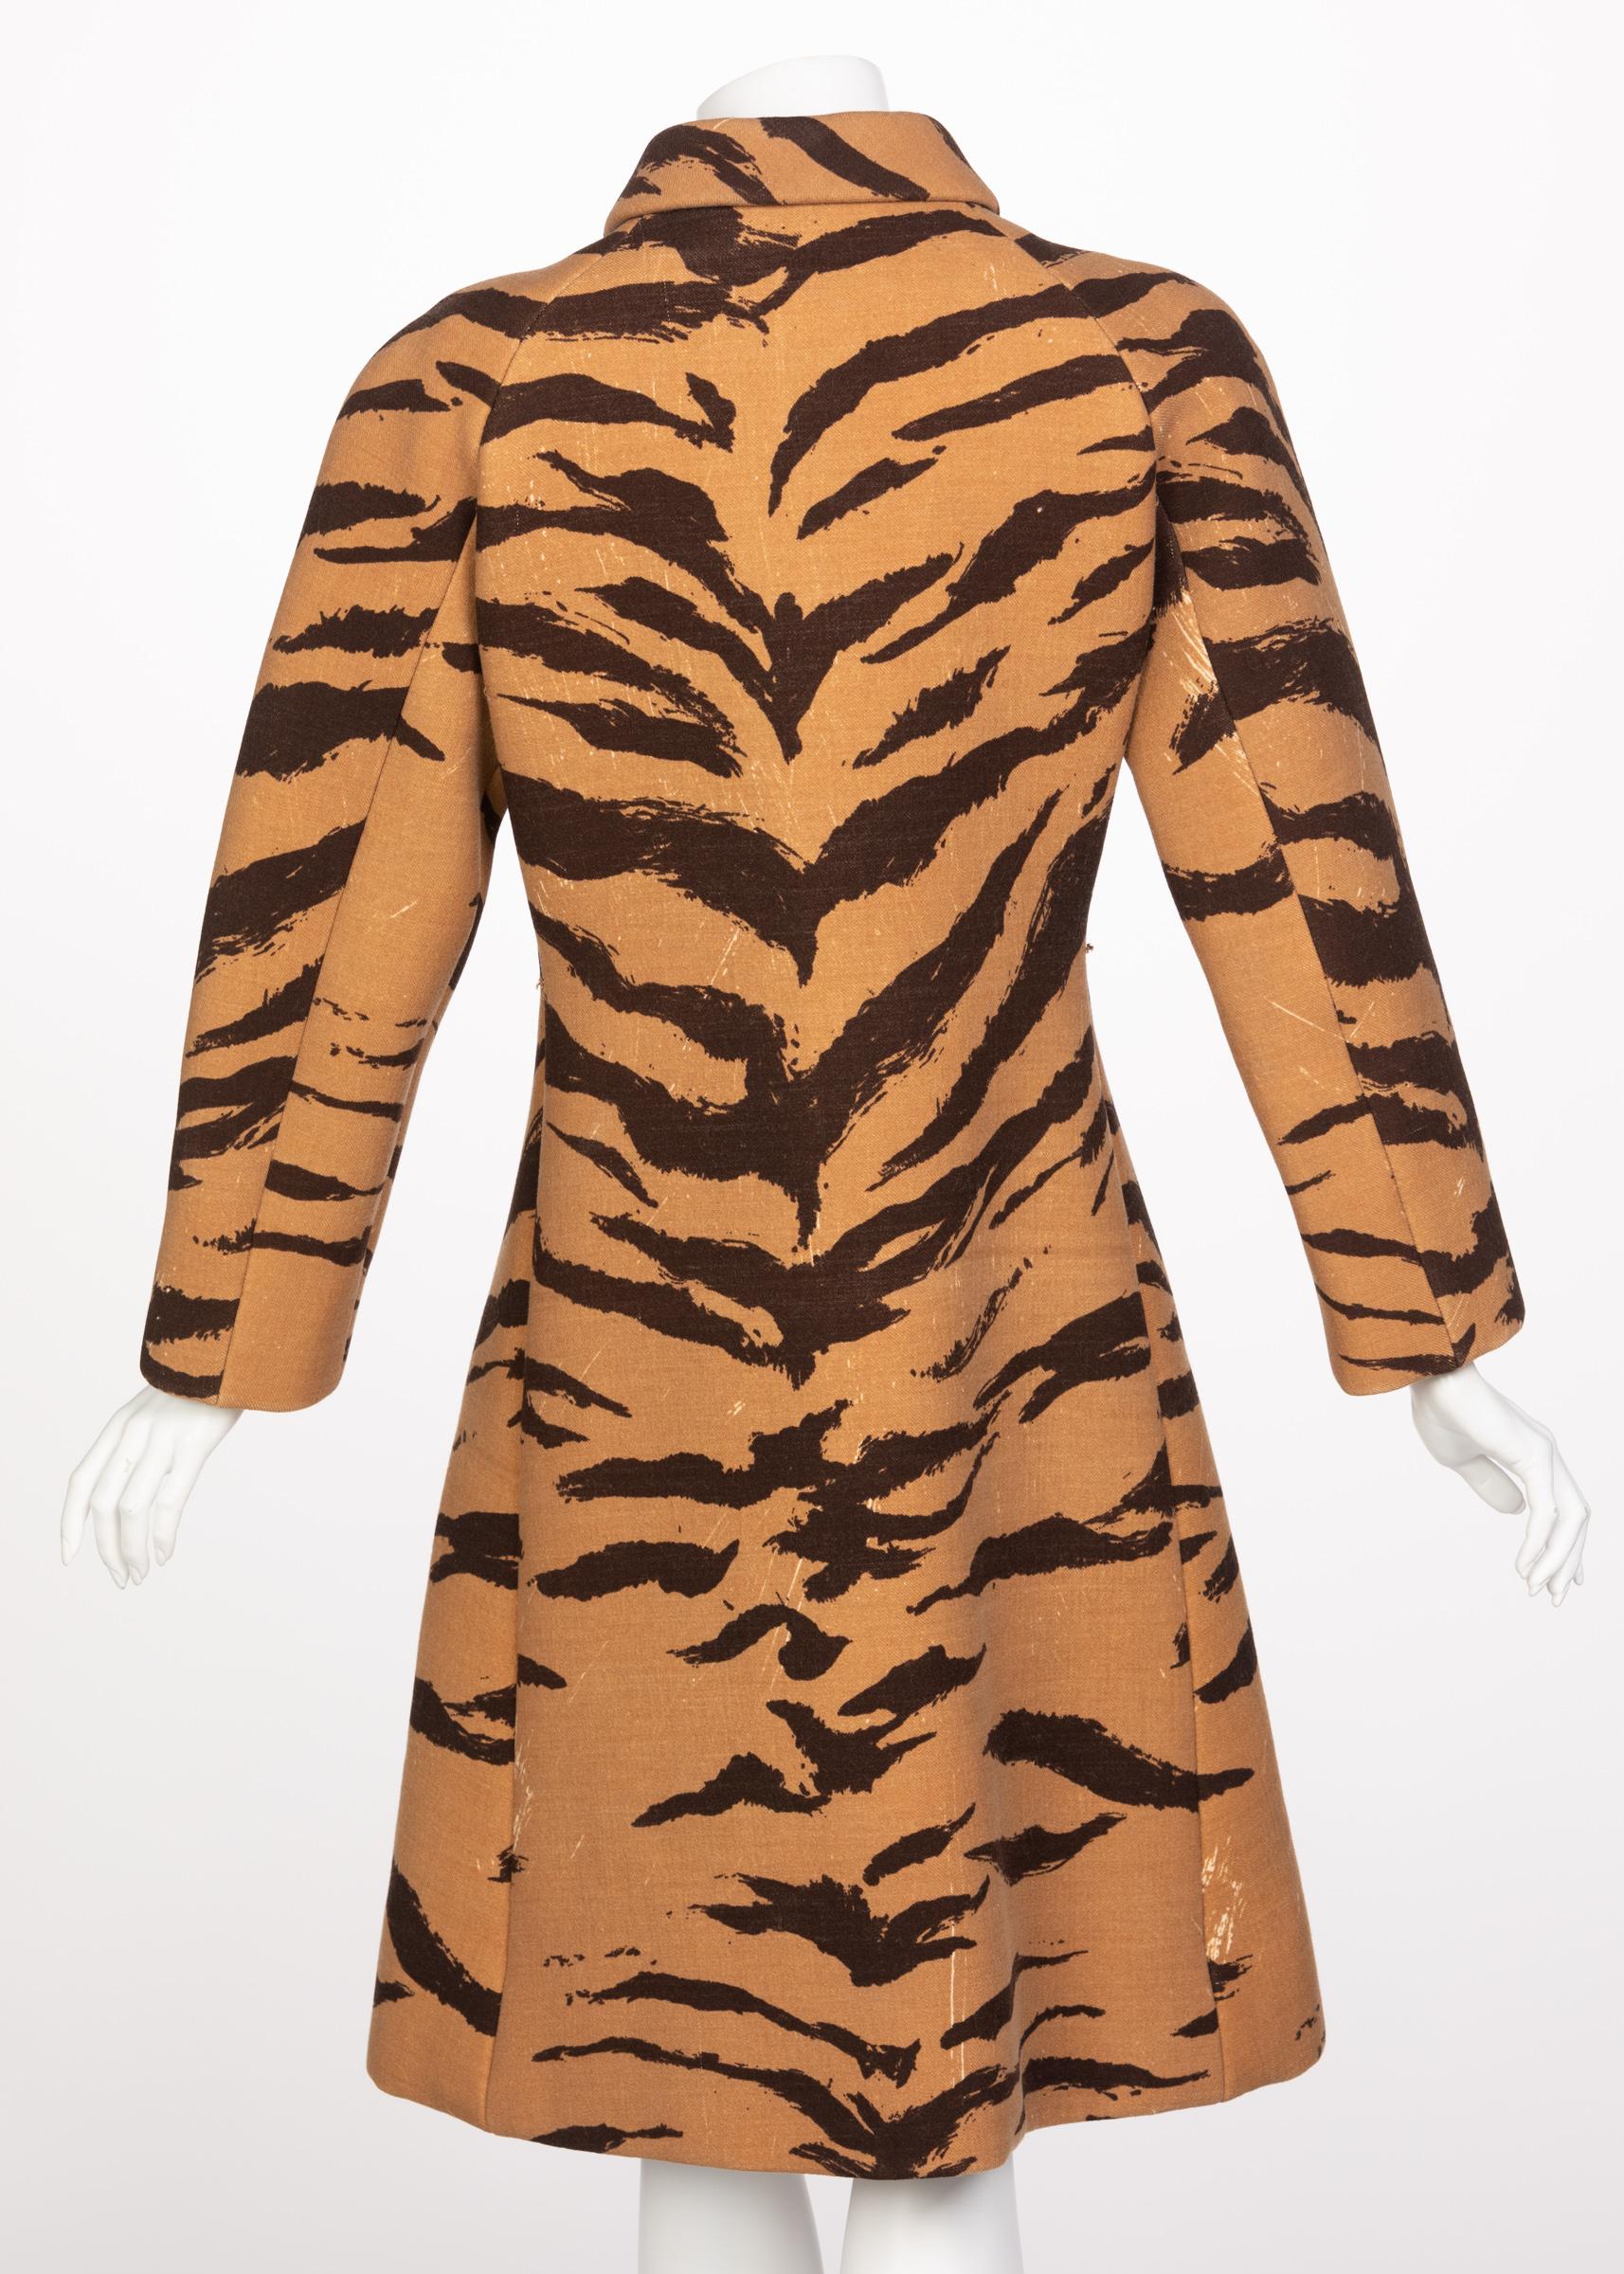 Brown Hubert de Givenchy Haute Couture Coat Tiger Print Coat  Documented , 1969